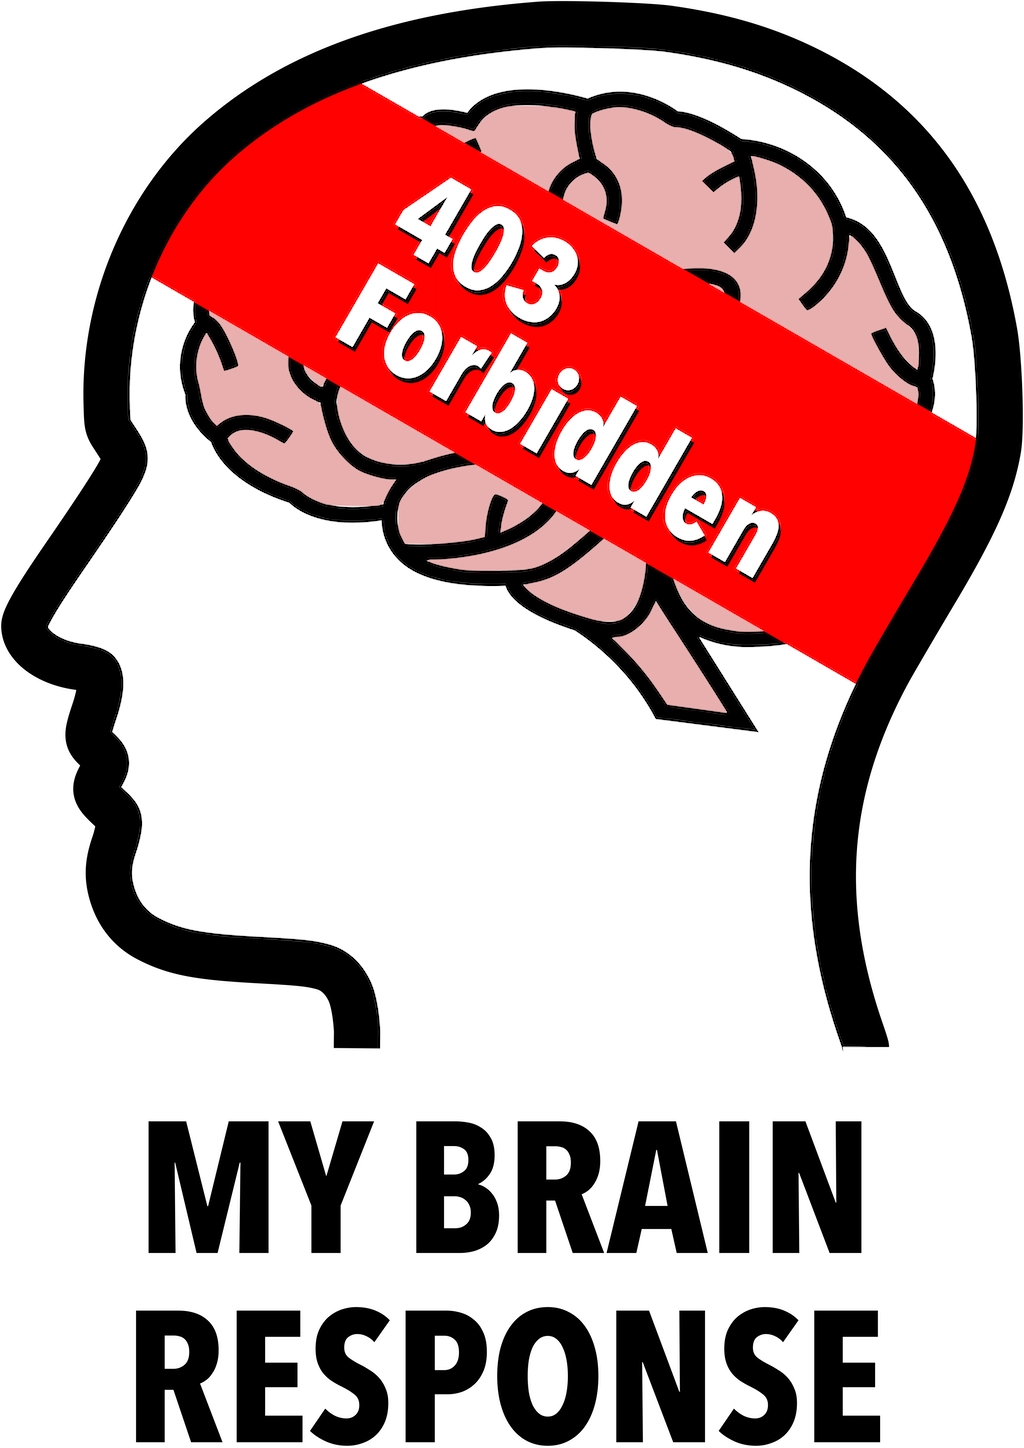 My Brain Response: 403 Forbidden